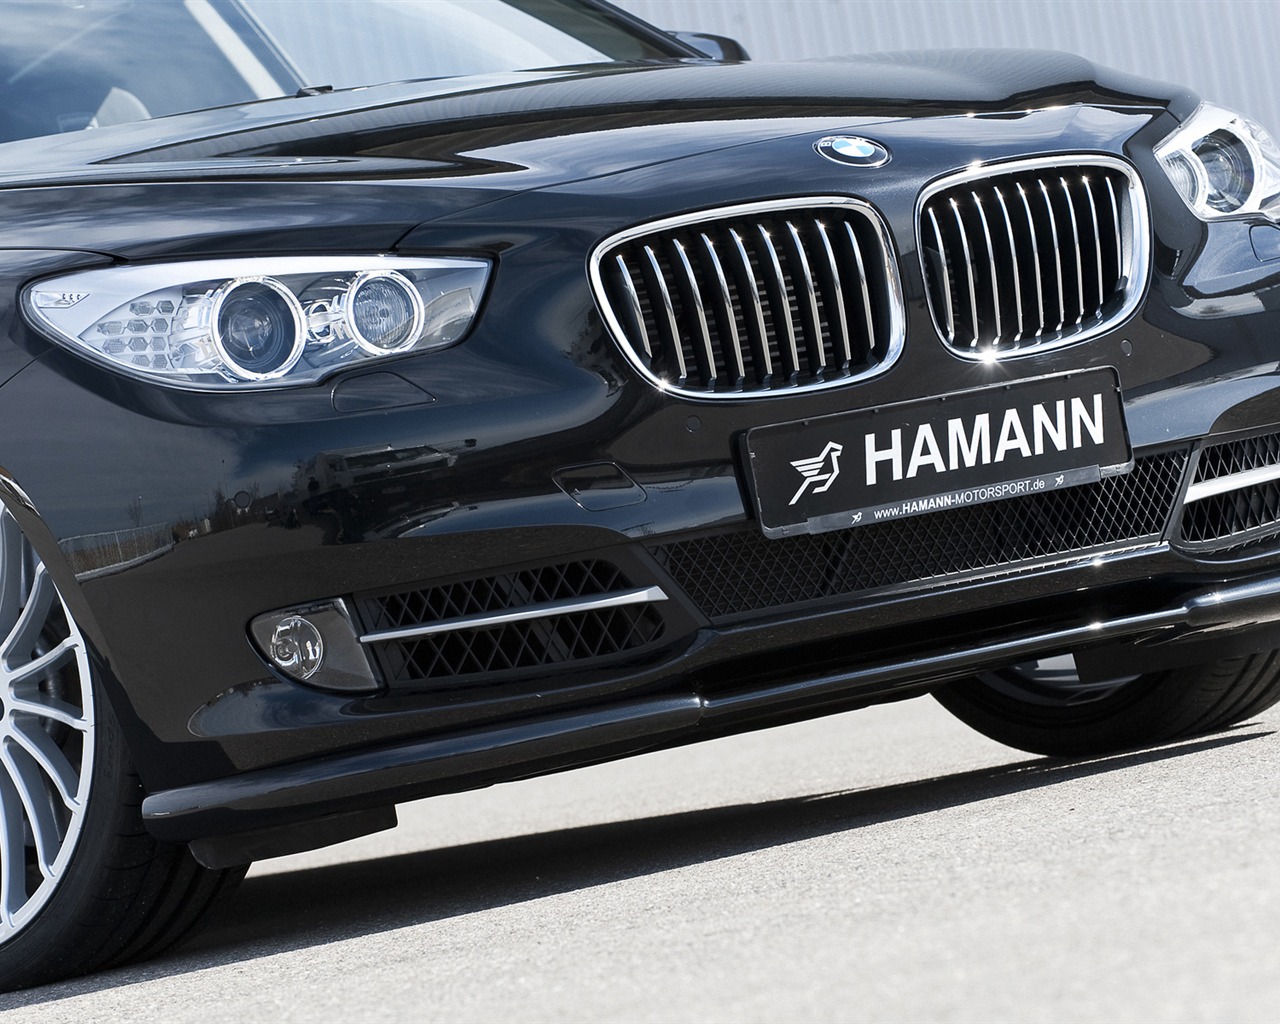 Hamann BMW 5-Series Gran Turismo - 2010 宝马20 - 1280x1024